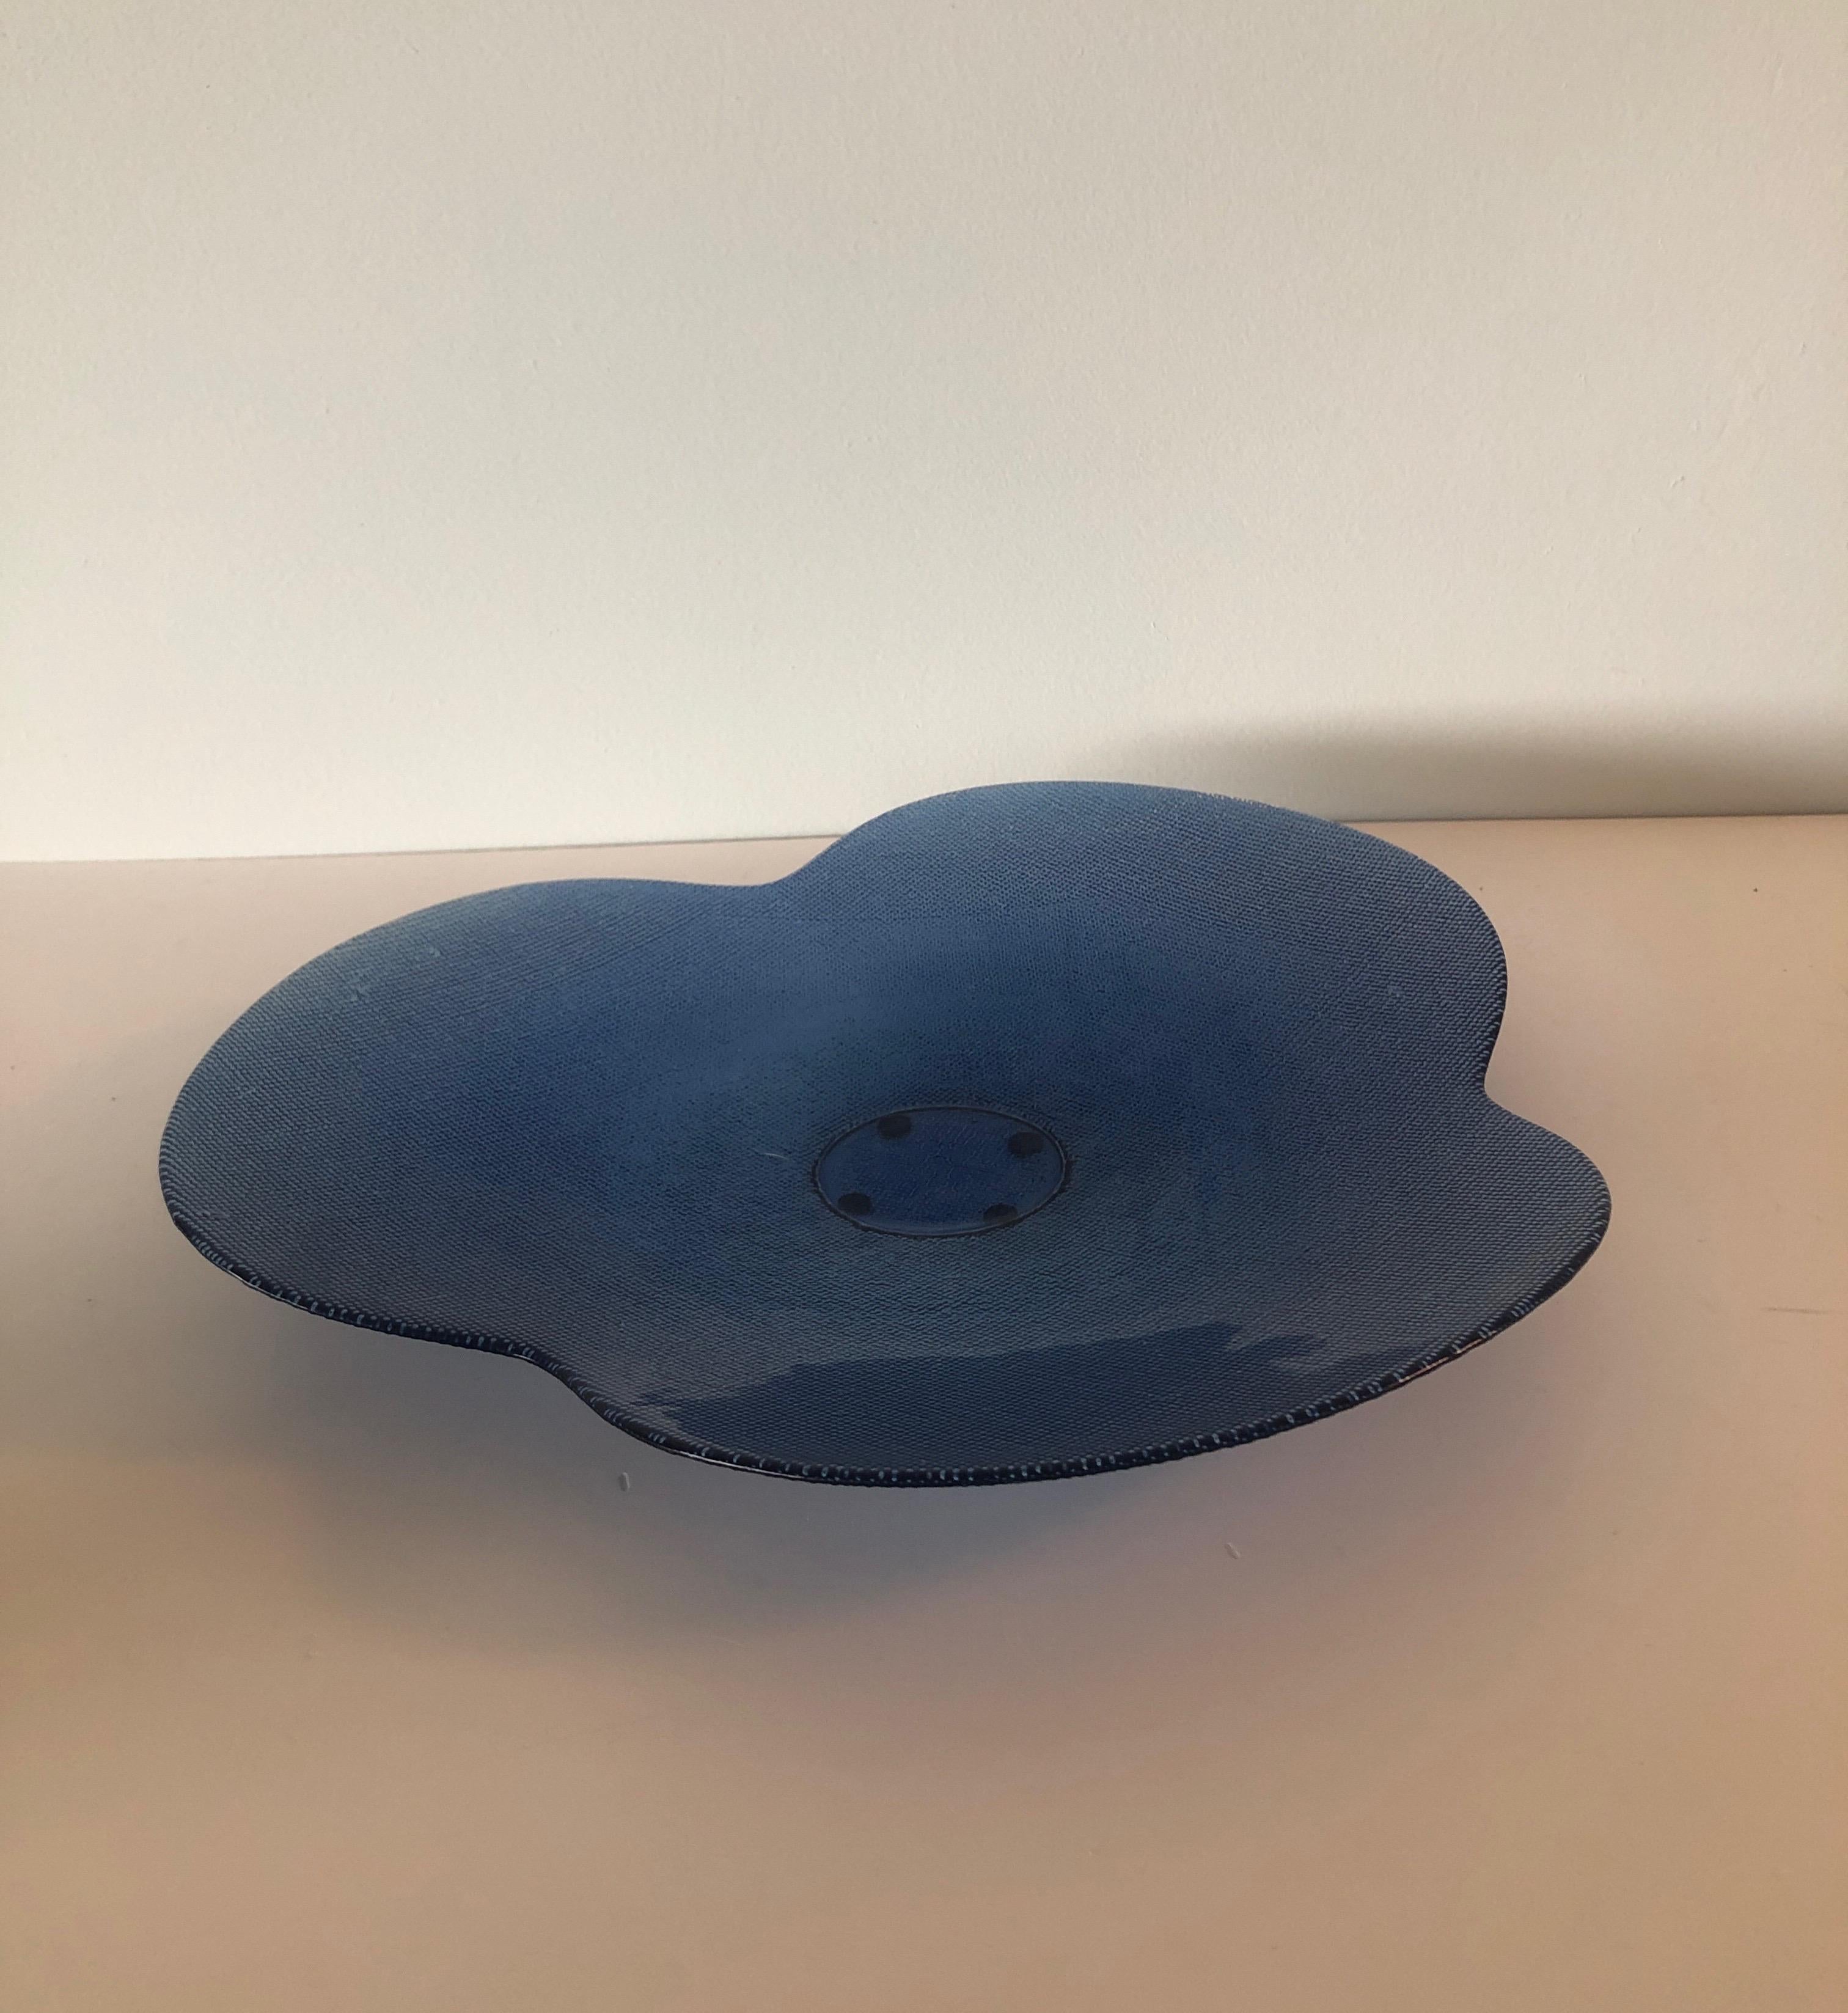 Mid-Century Modern style blue glass clover shape decorative serving bowl.
Size: 16